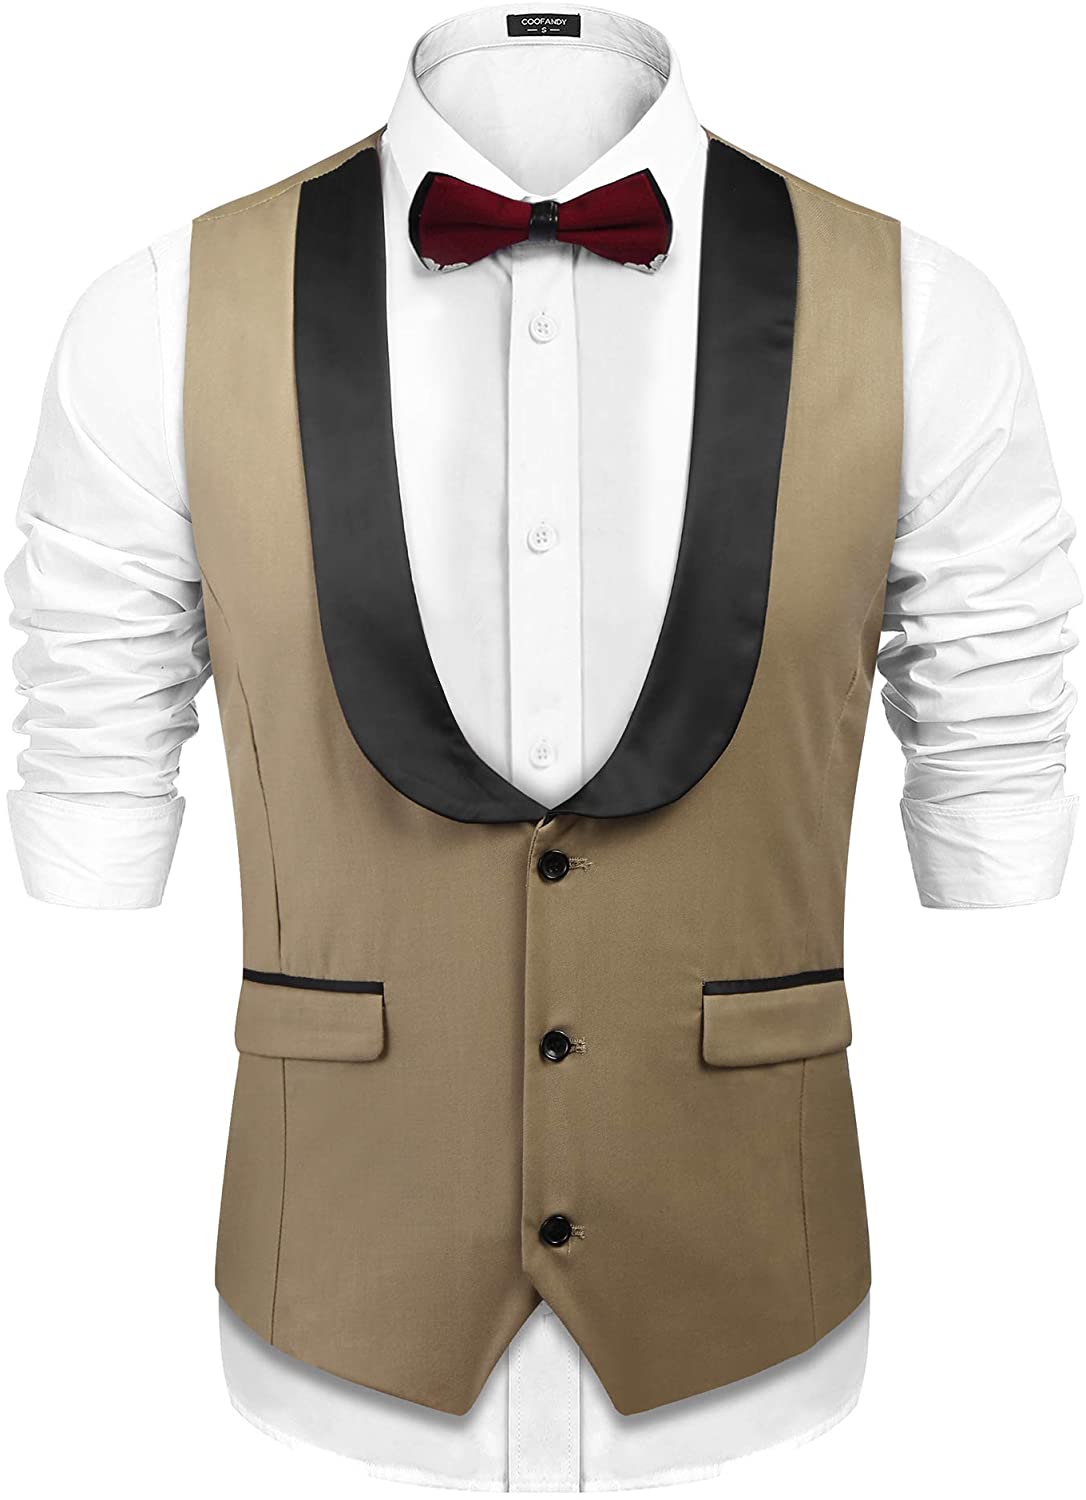 Coofandy Men S Business Suit Vest Casual Layered Slim Fit Wedding Vests